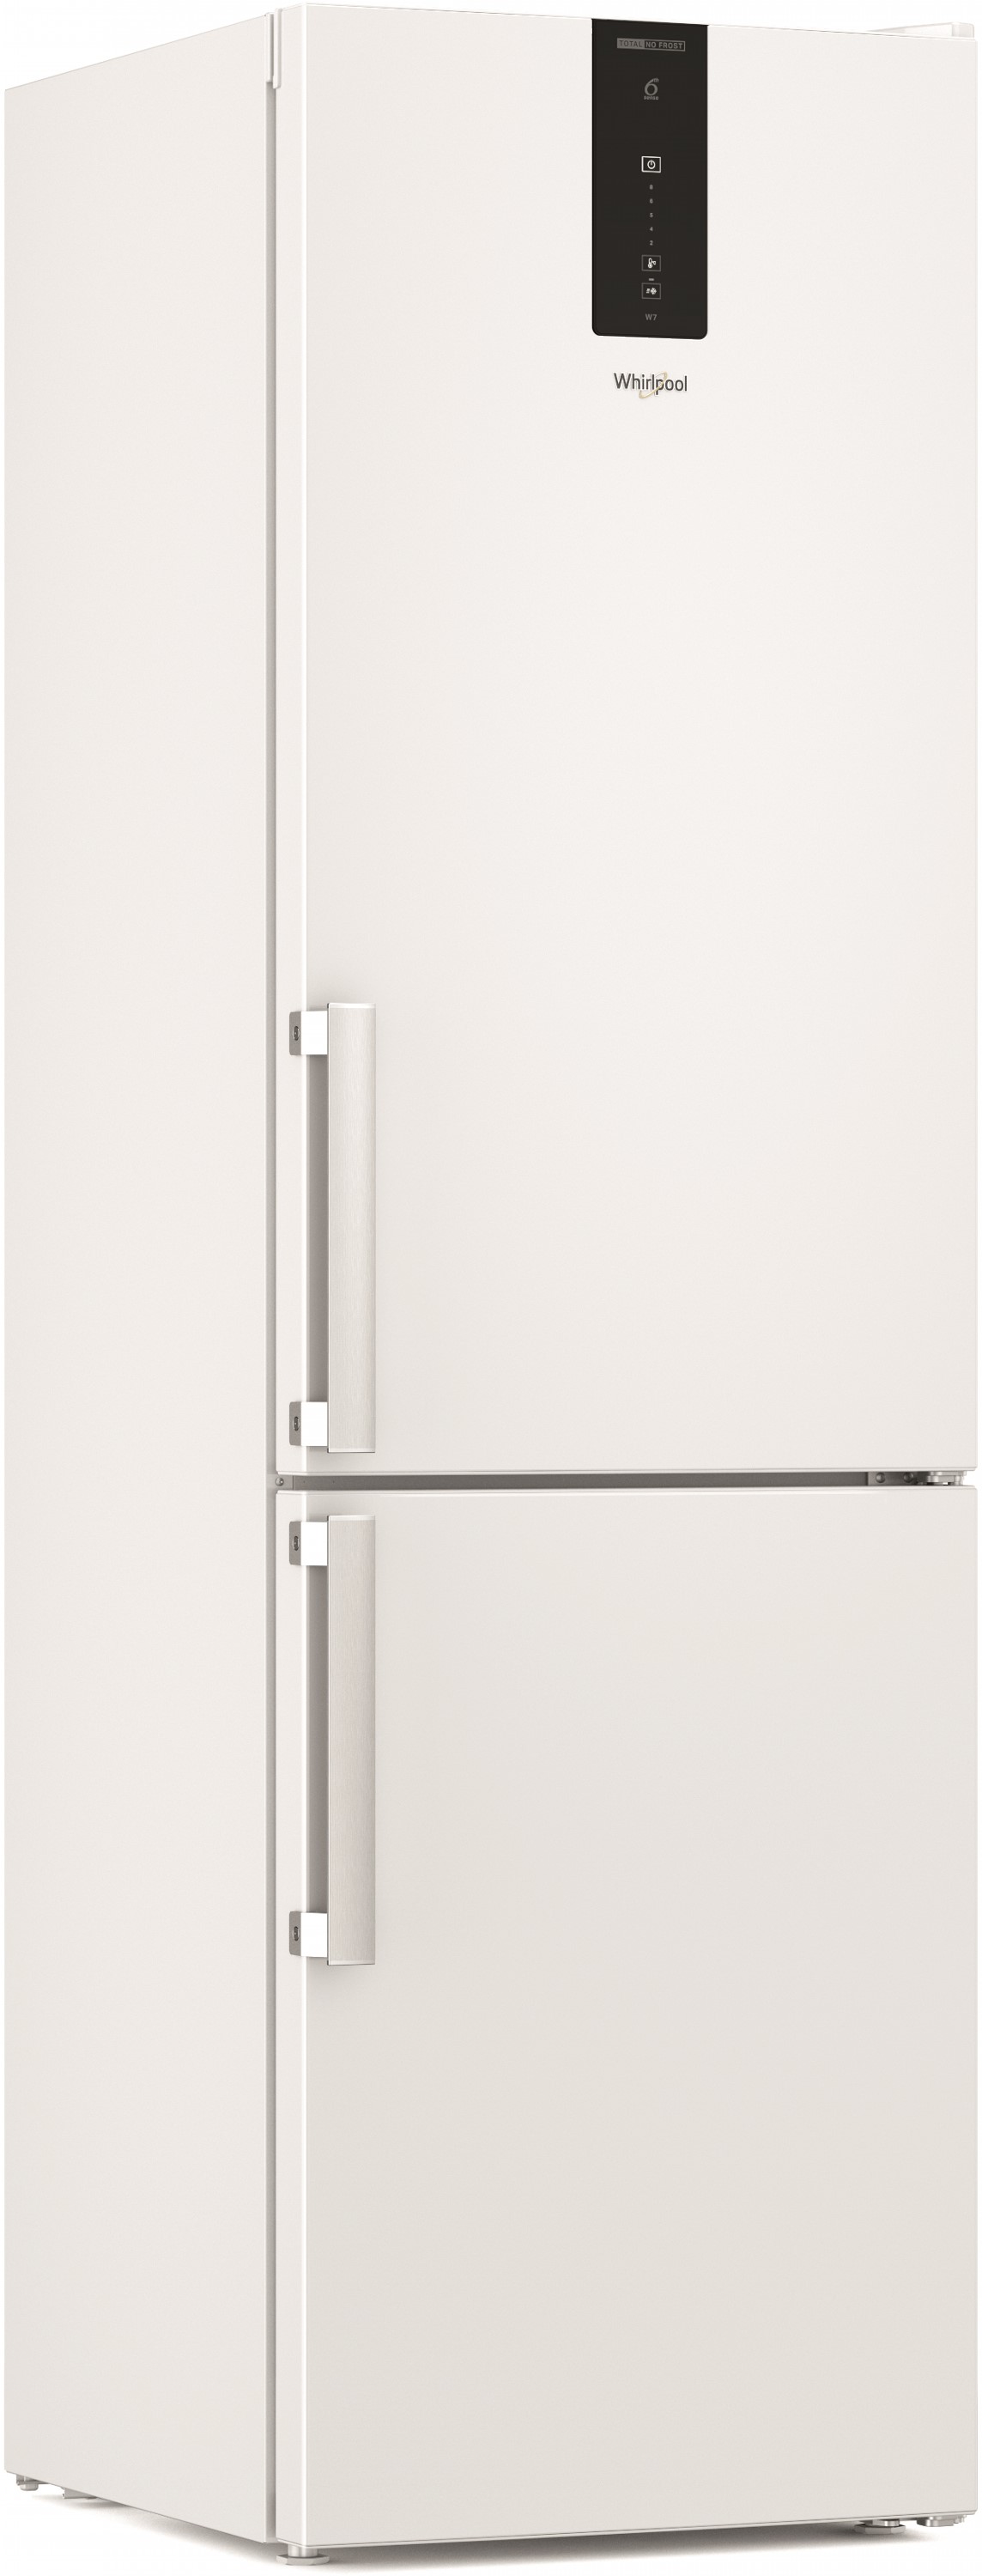 Холодильник Whirlpool W7X 92O W H UA цена 23499.00 грн - фотография 2